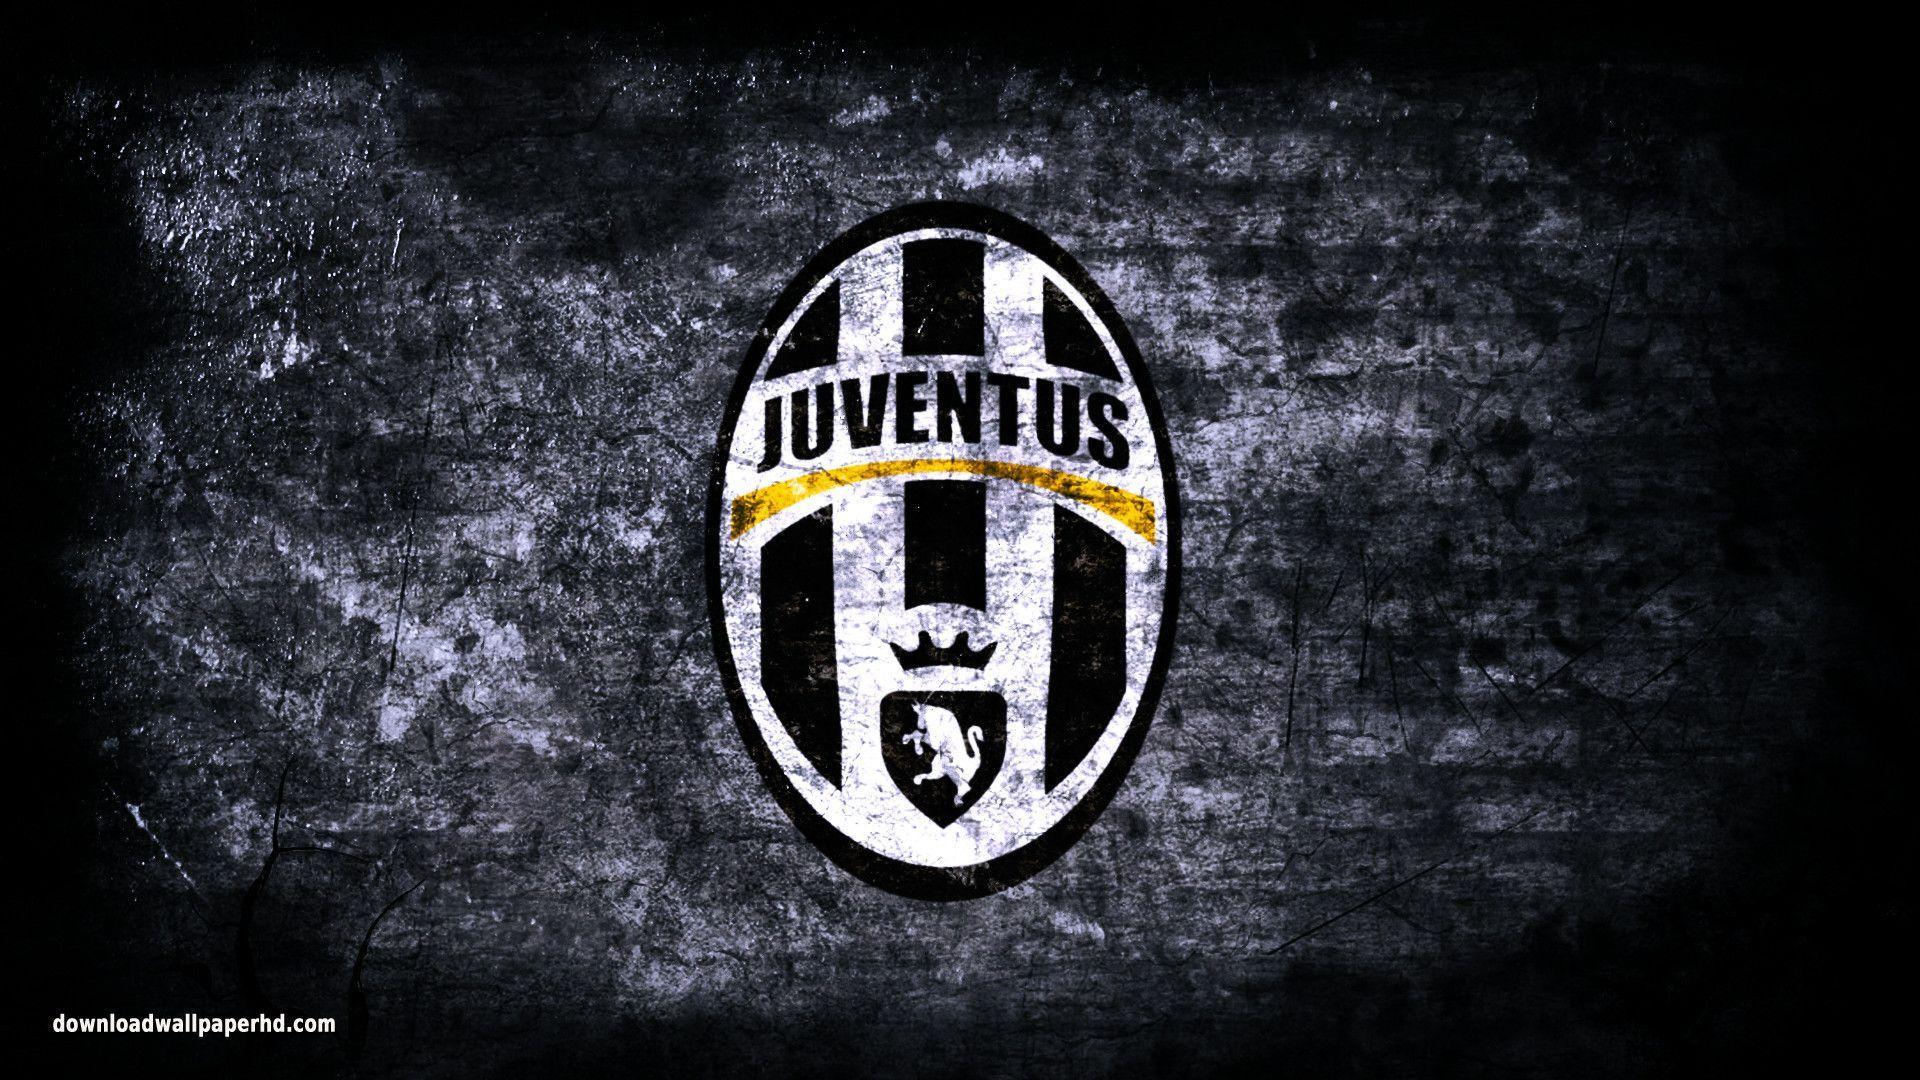 Arturo Vidal Juventus 2014 Exclusive HD Wallpaper